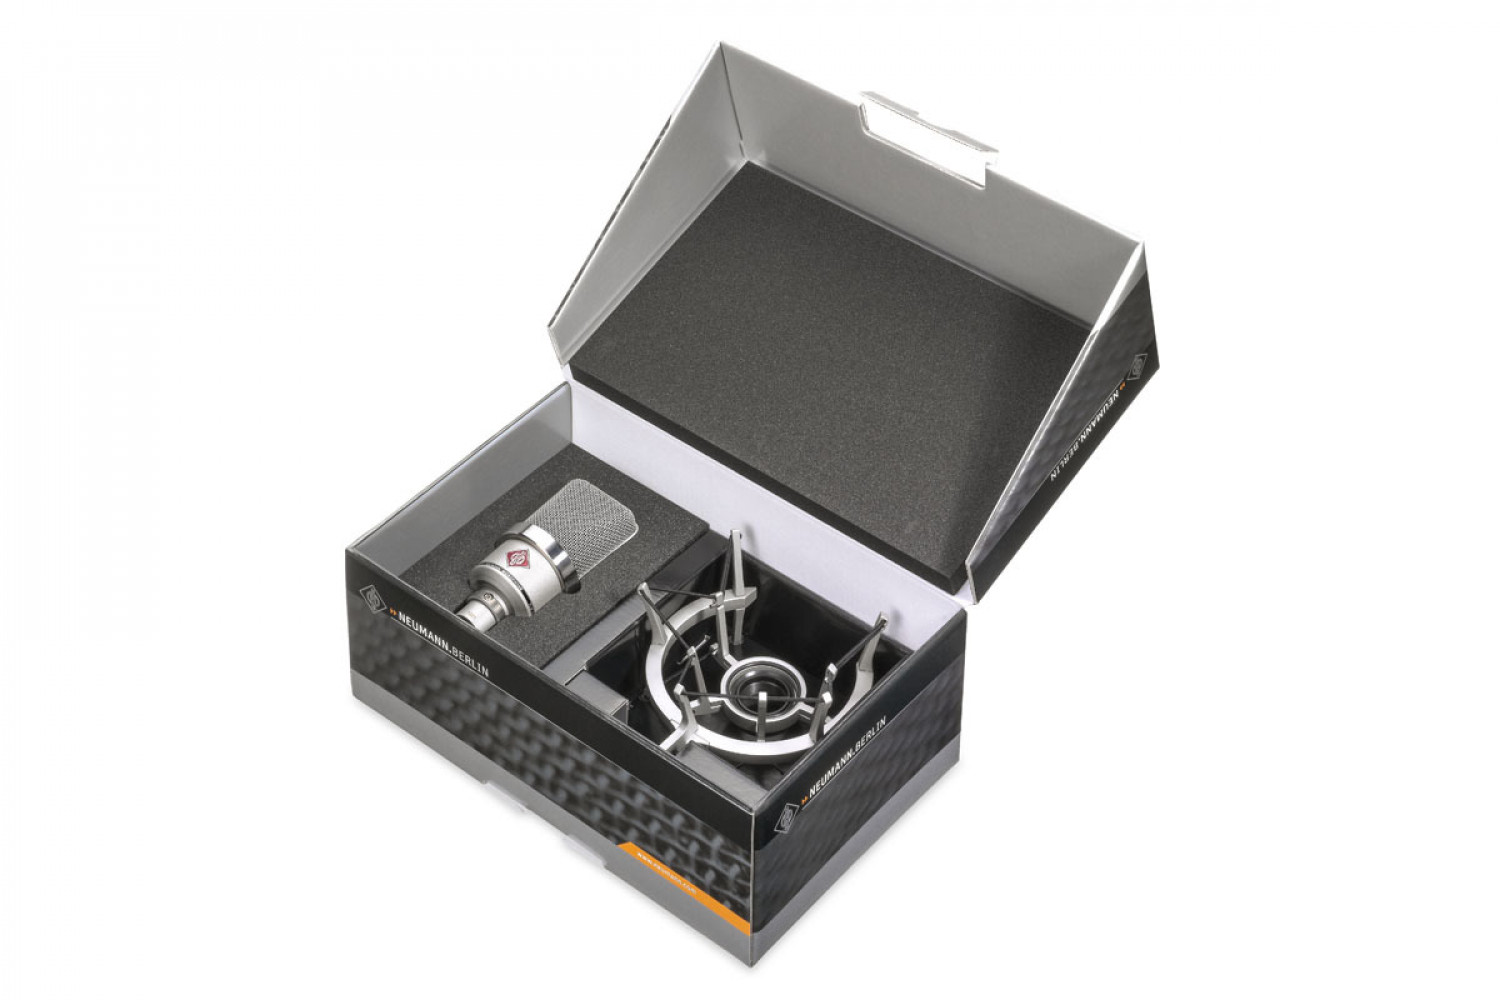 Neumann TLM 102 Studio Set Large-Diaphragm Cardioid Condenser Microphone with Shockmount